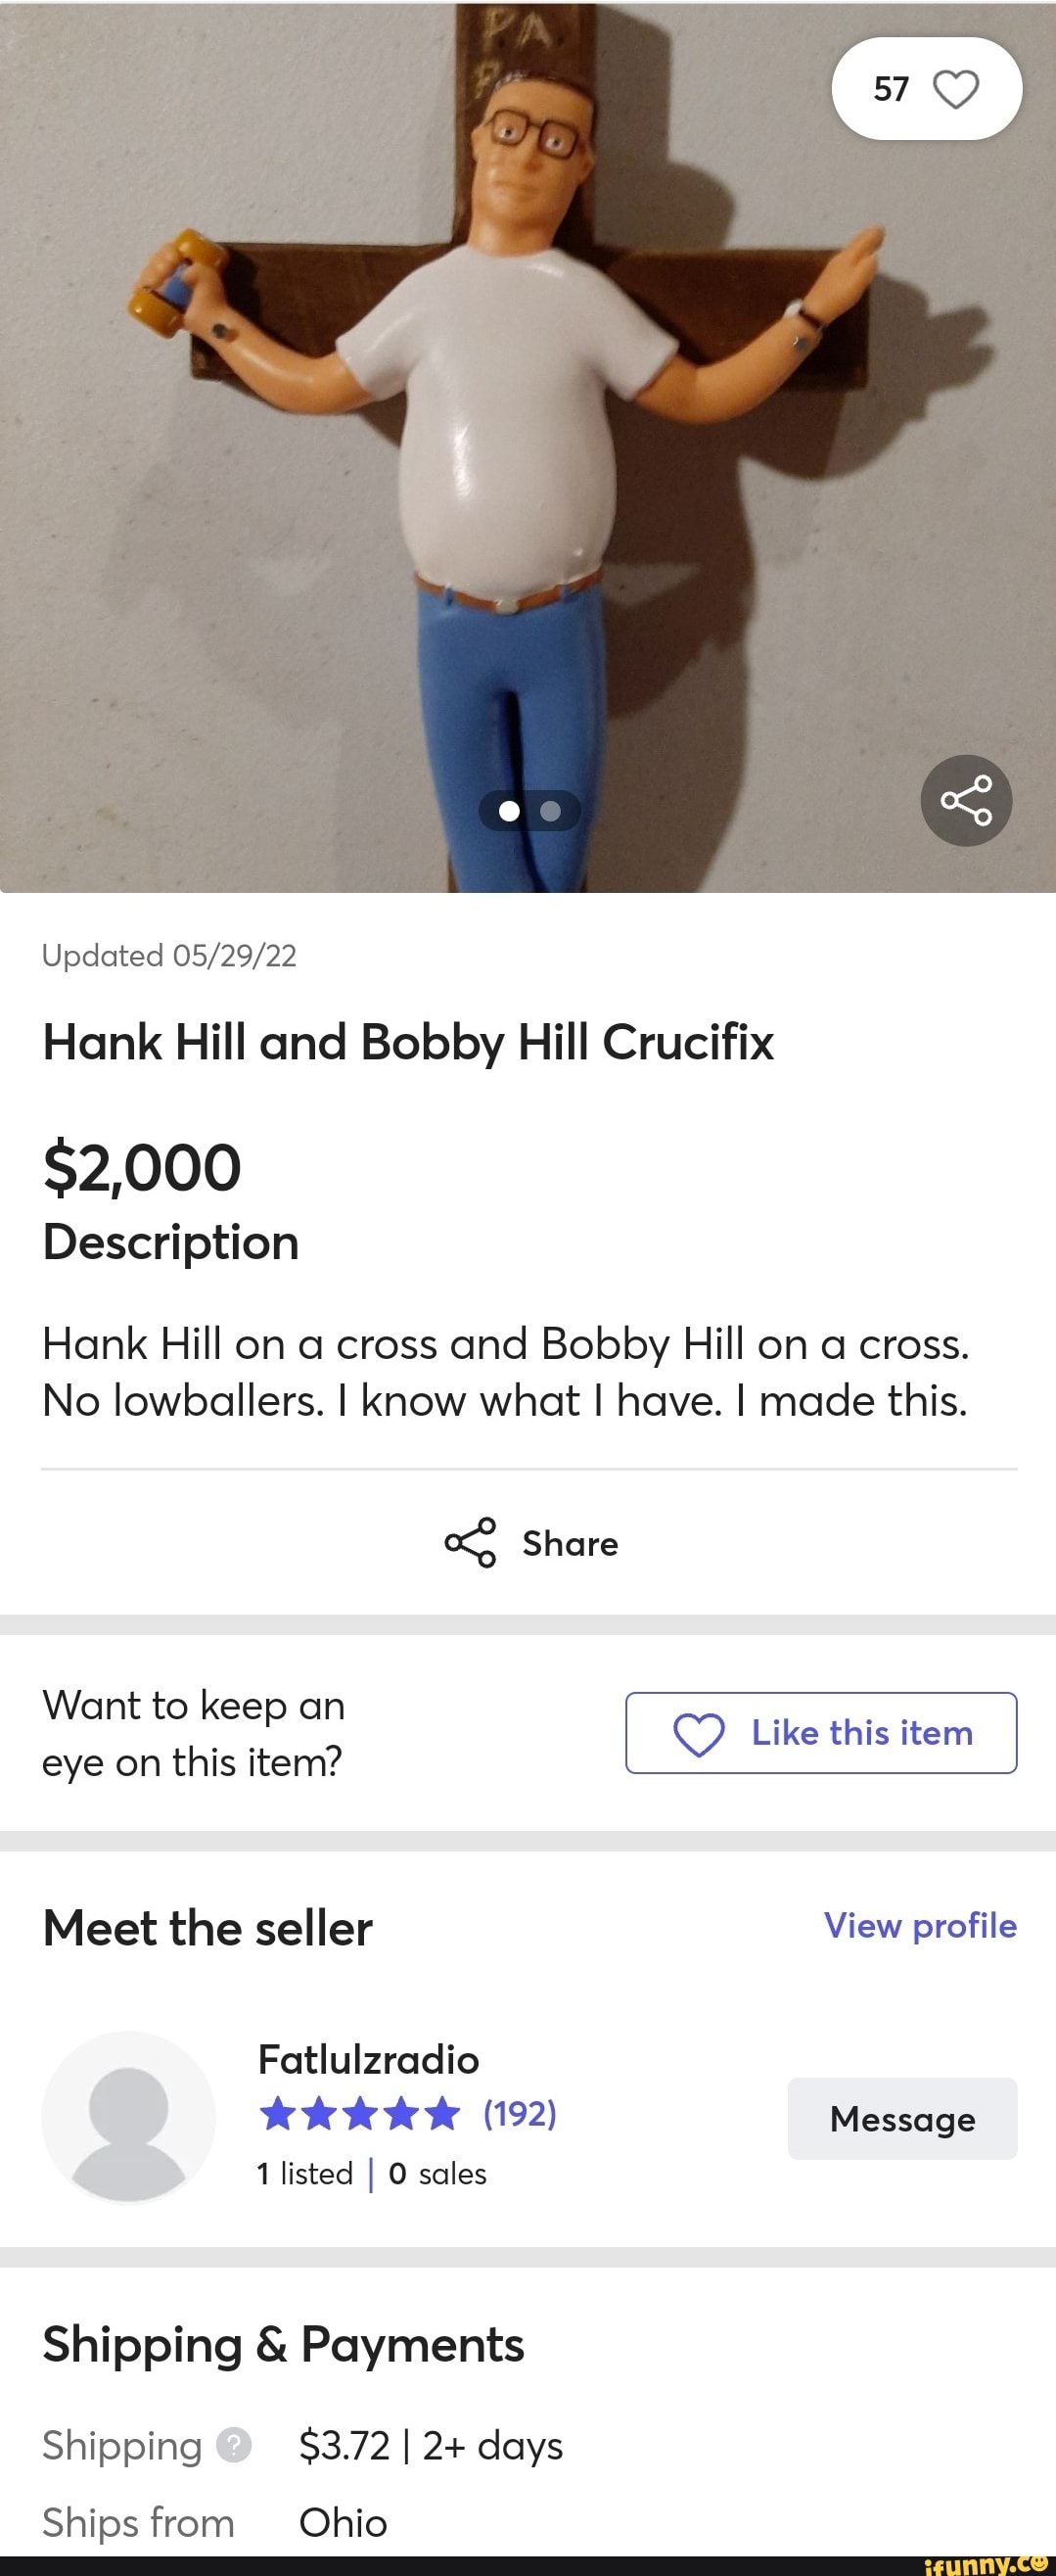 Hank hill crucifix